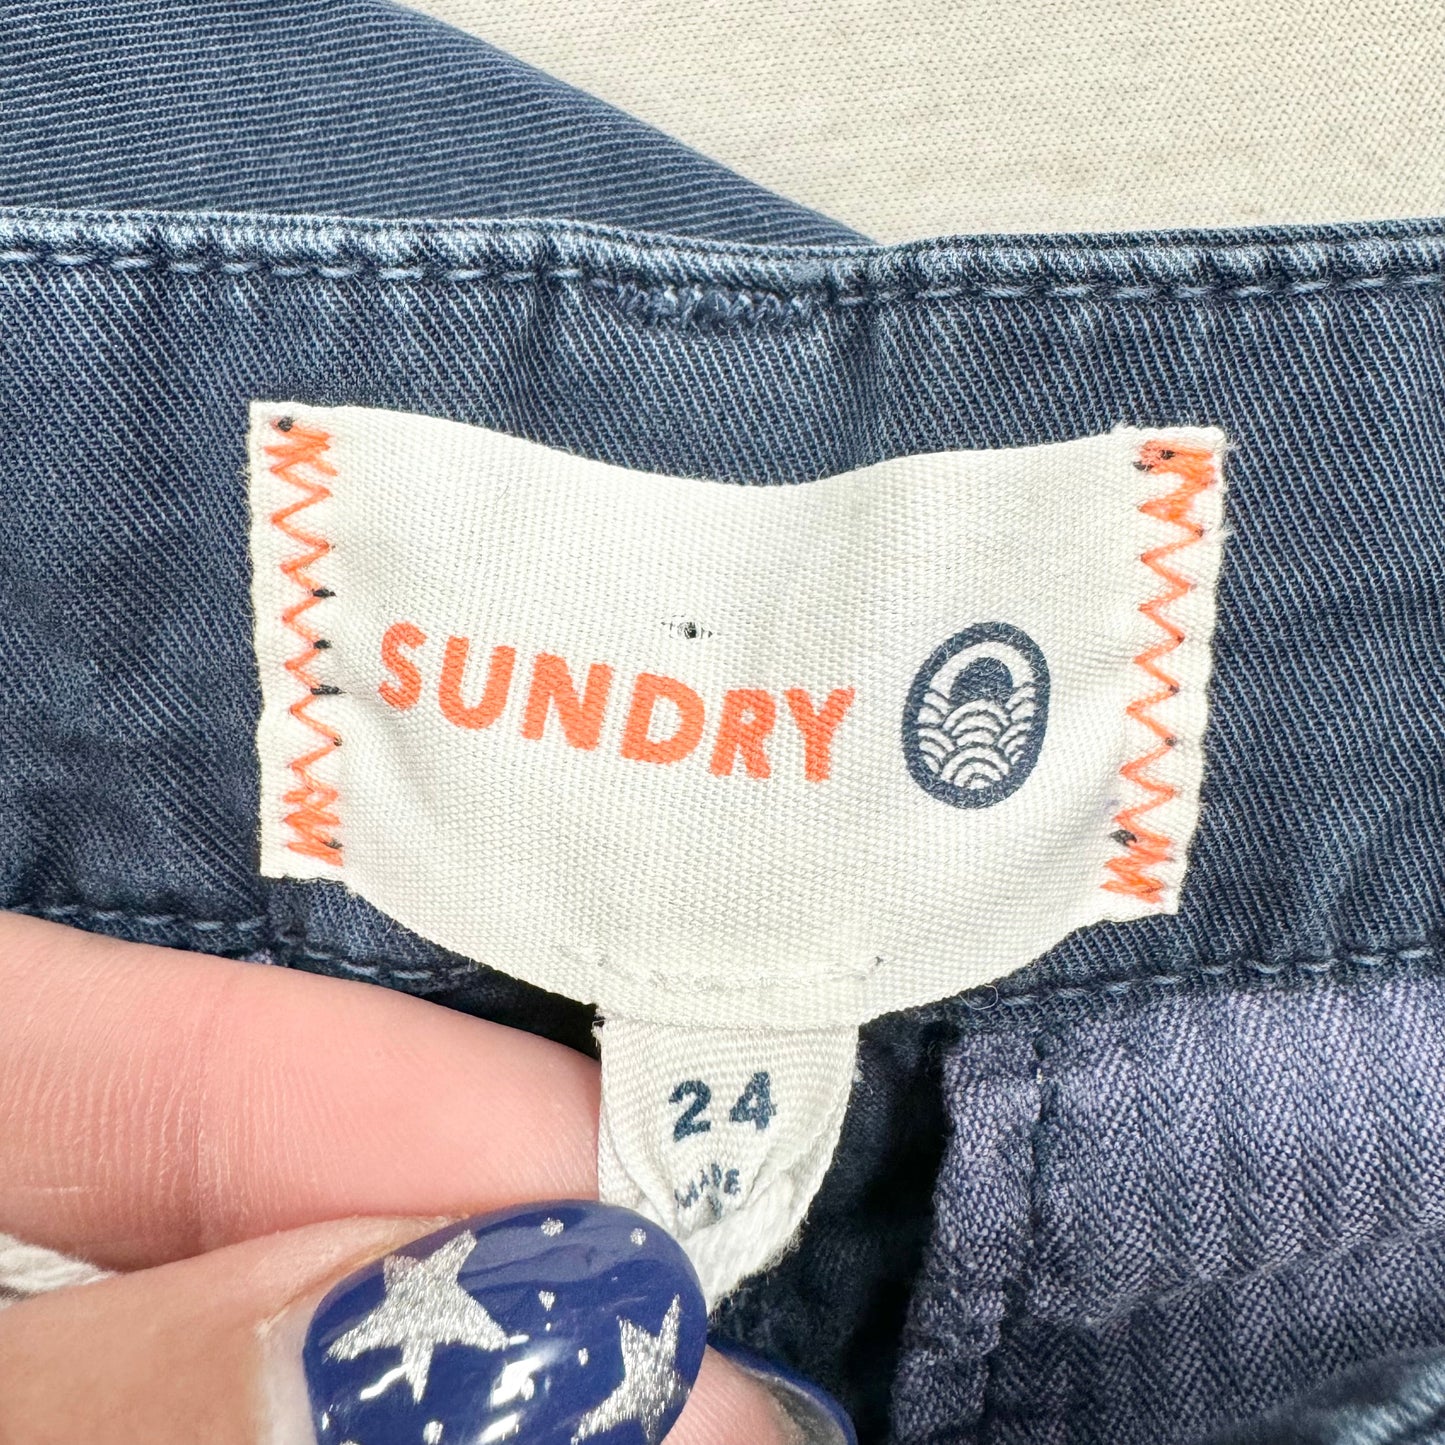 Pants Other By Sundry  Size: 0